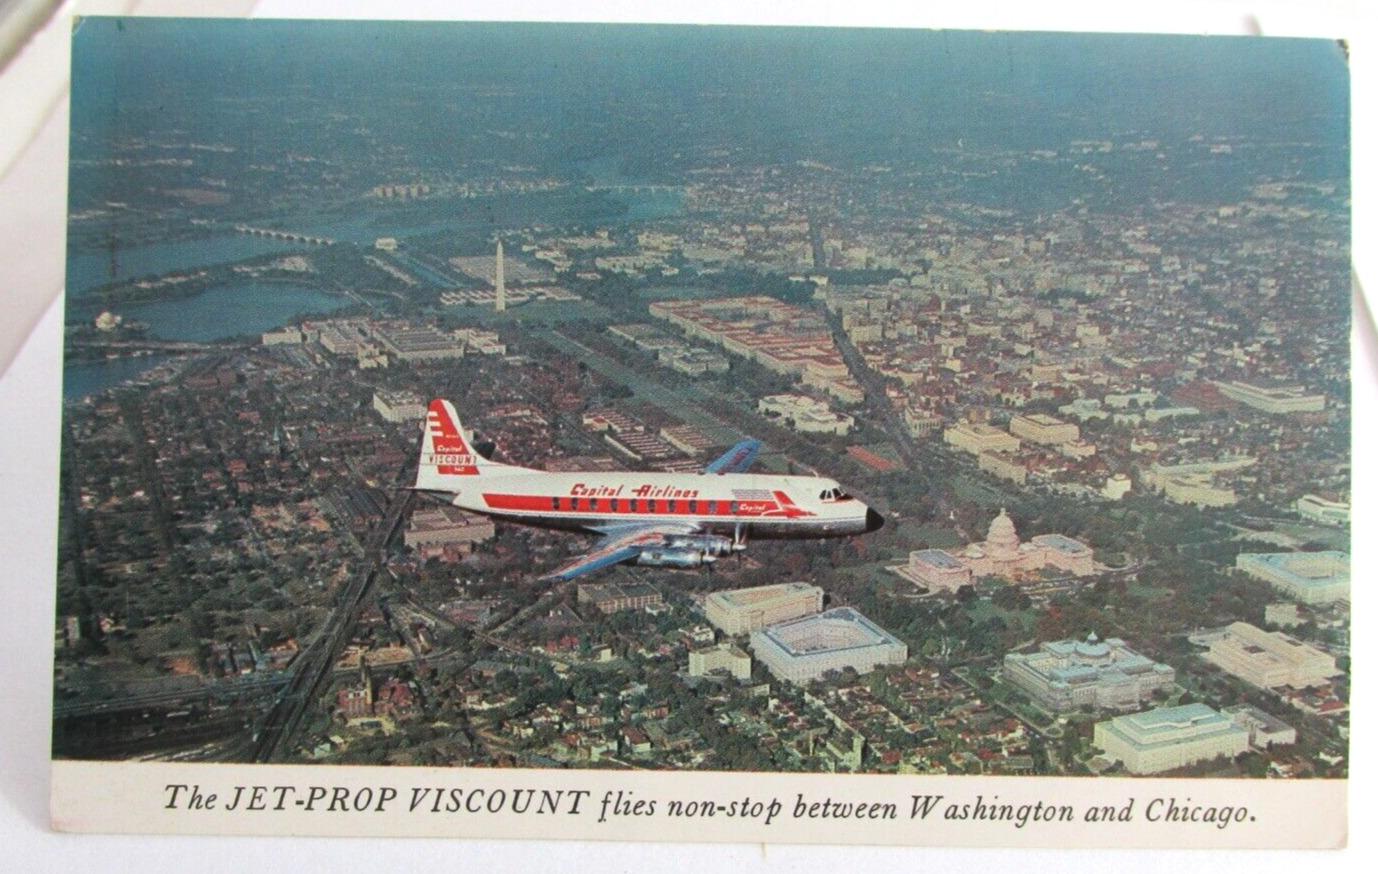 Vintage CAPITOL AIRLINES VISCOUNT Advertising Airplane Postcard, Air line plane